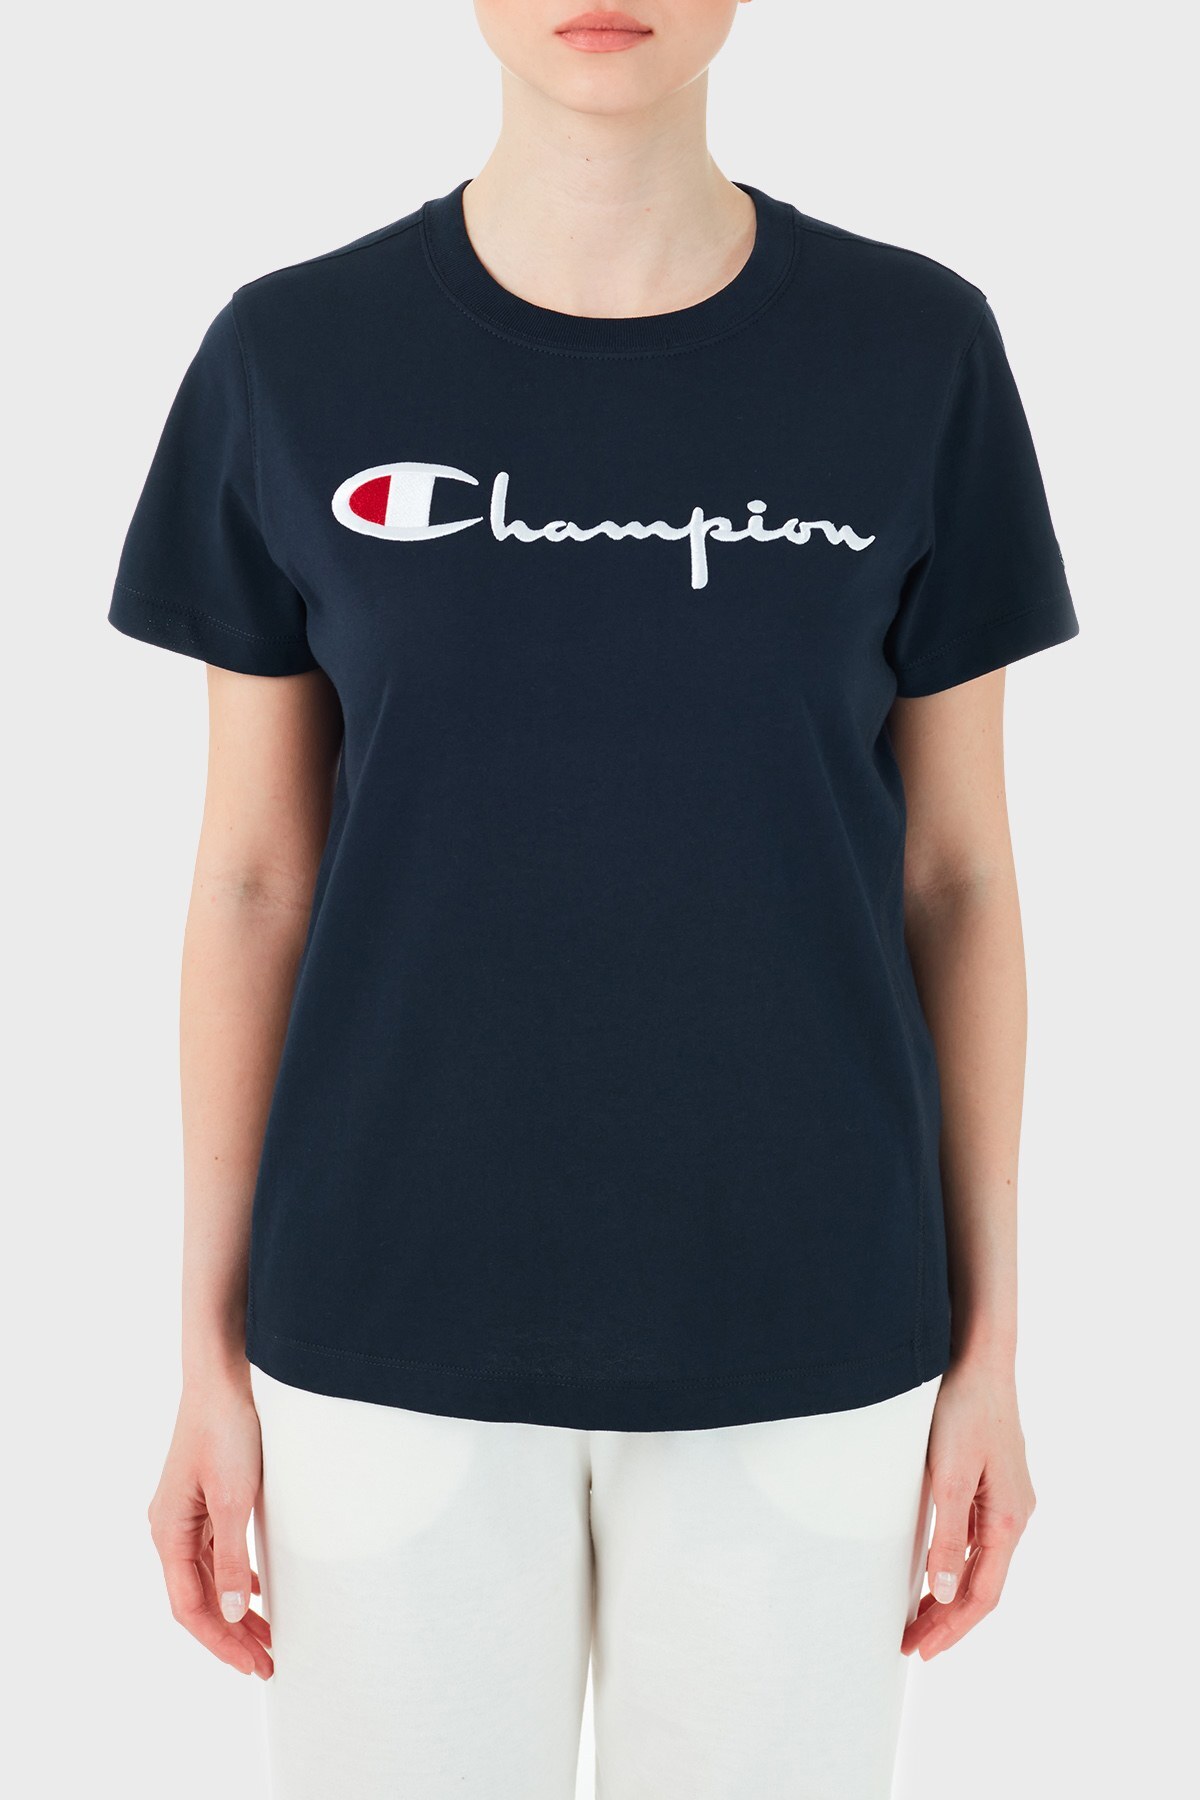 Champion Logo Baskılı Bisiklet Yaka % 100 Pamuk Bayan T Shirt 110992 NNY BS501 LACİVERT